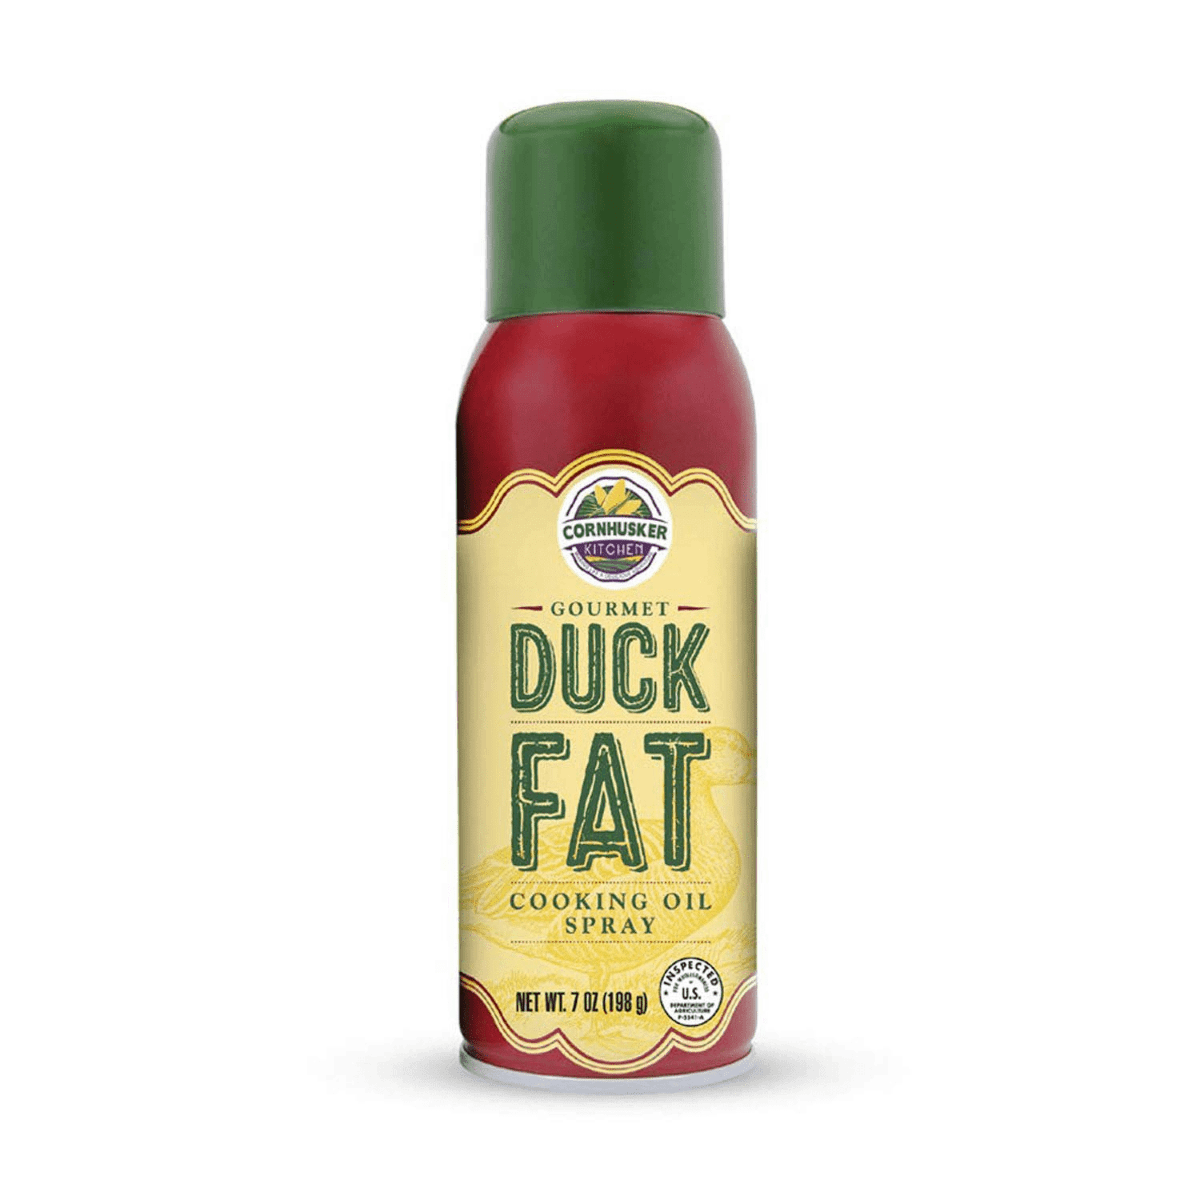 Cornhuskers Gourmet Oils & Vinegar Cornhusker Gourmet Duck Fat Cooking Oil Spray 7 oz